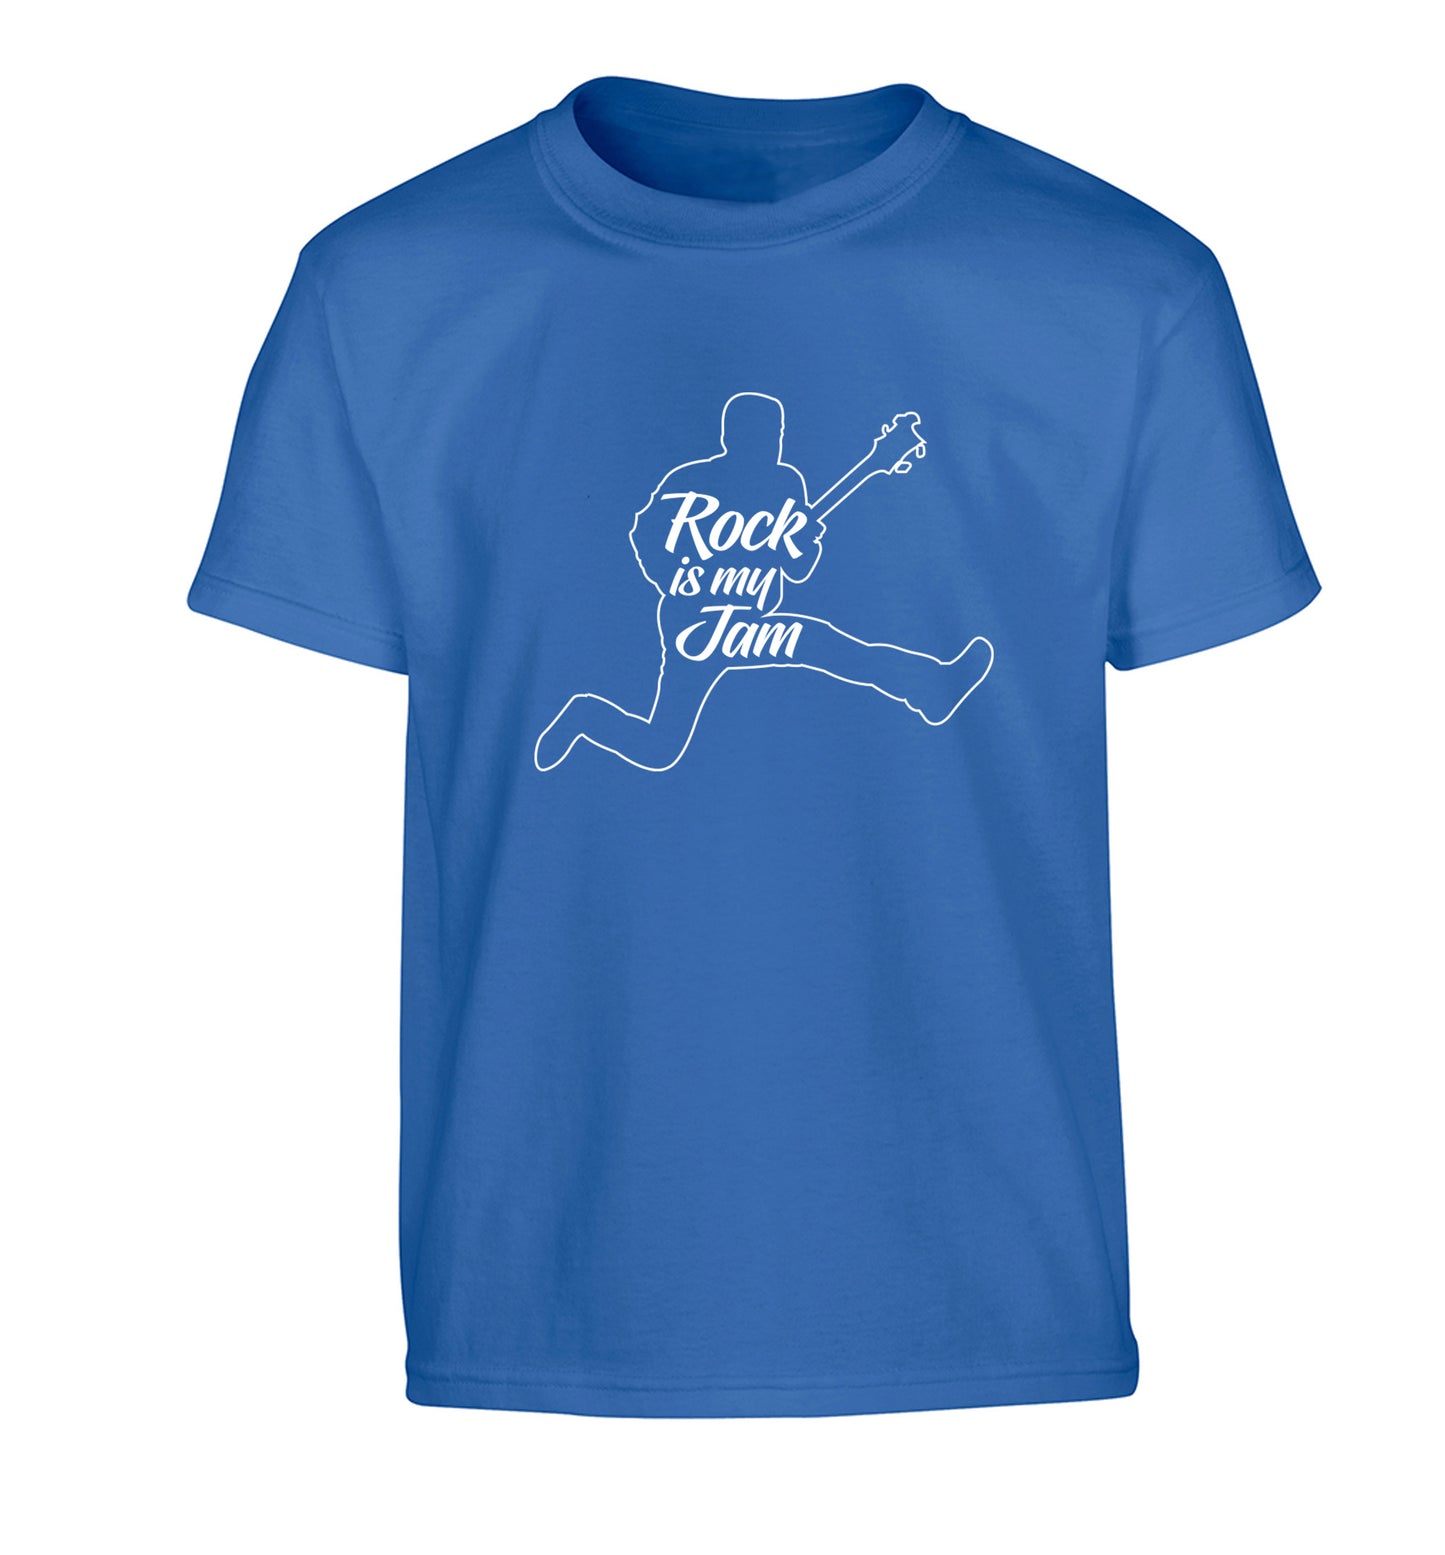 Rock is my jam Children's blue Tshirt 12-13 Years